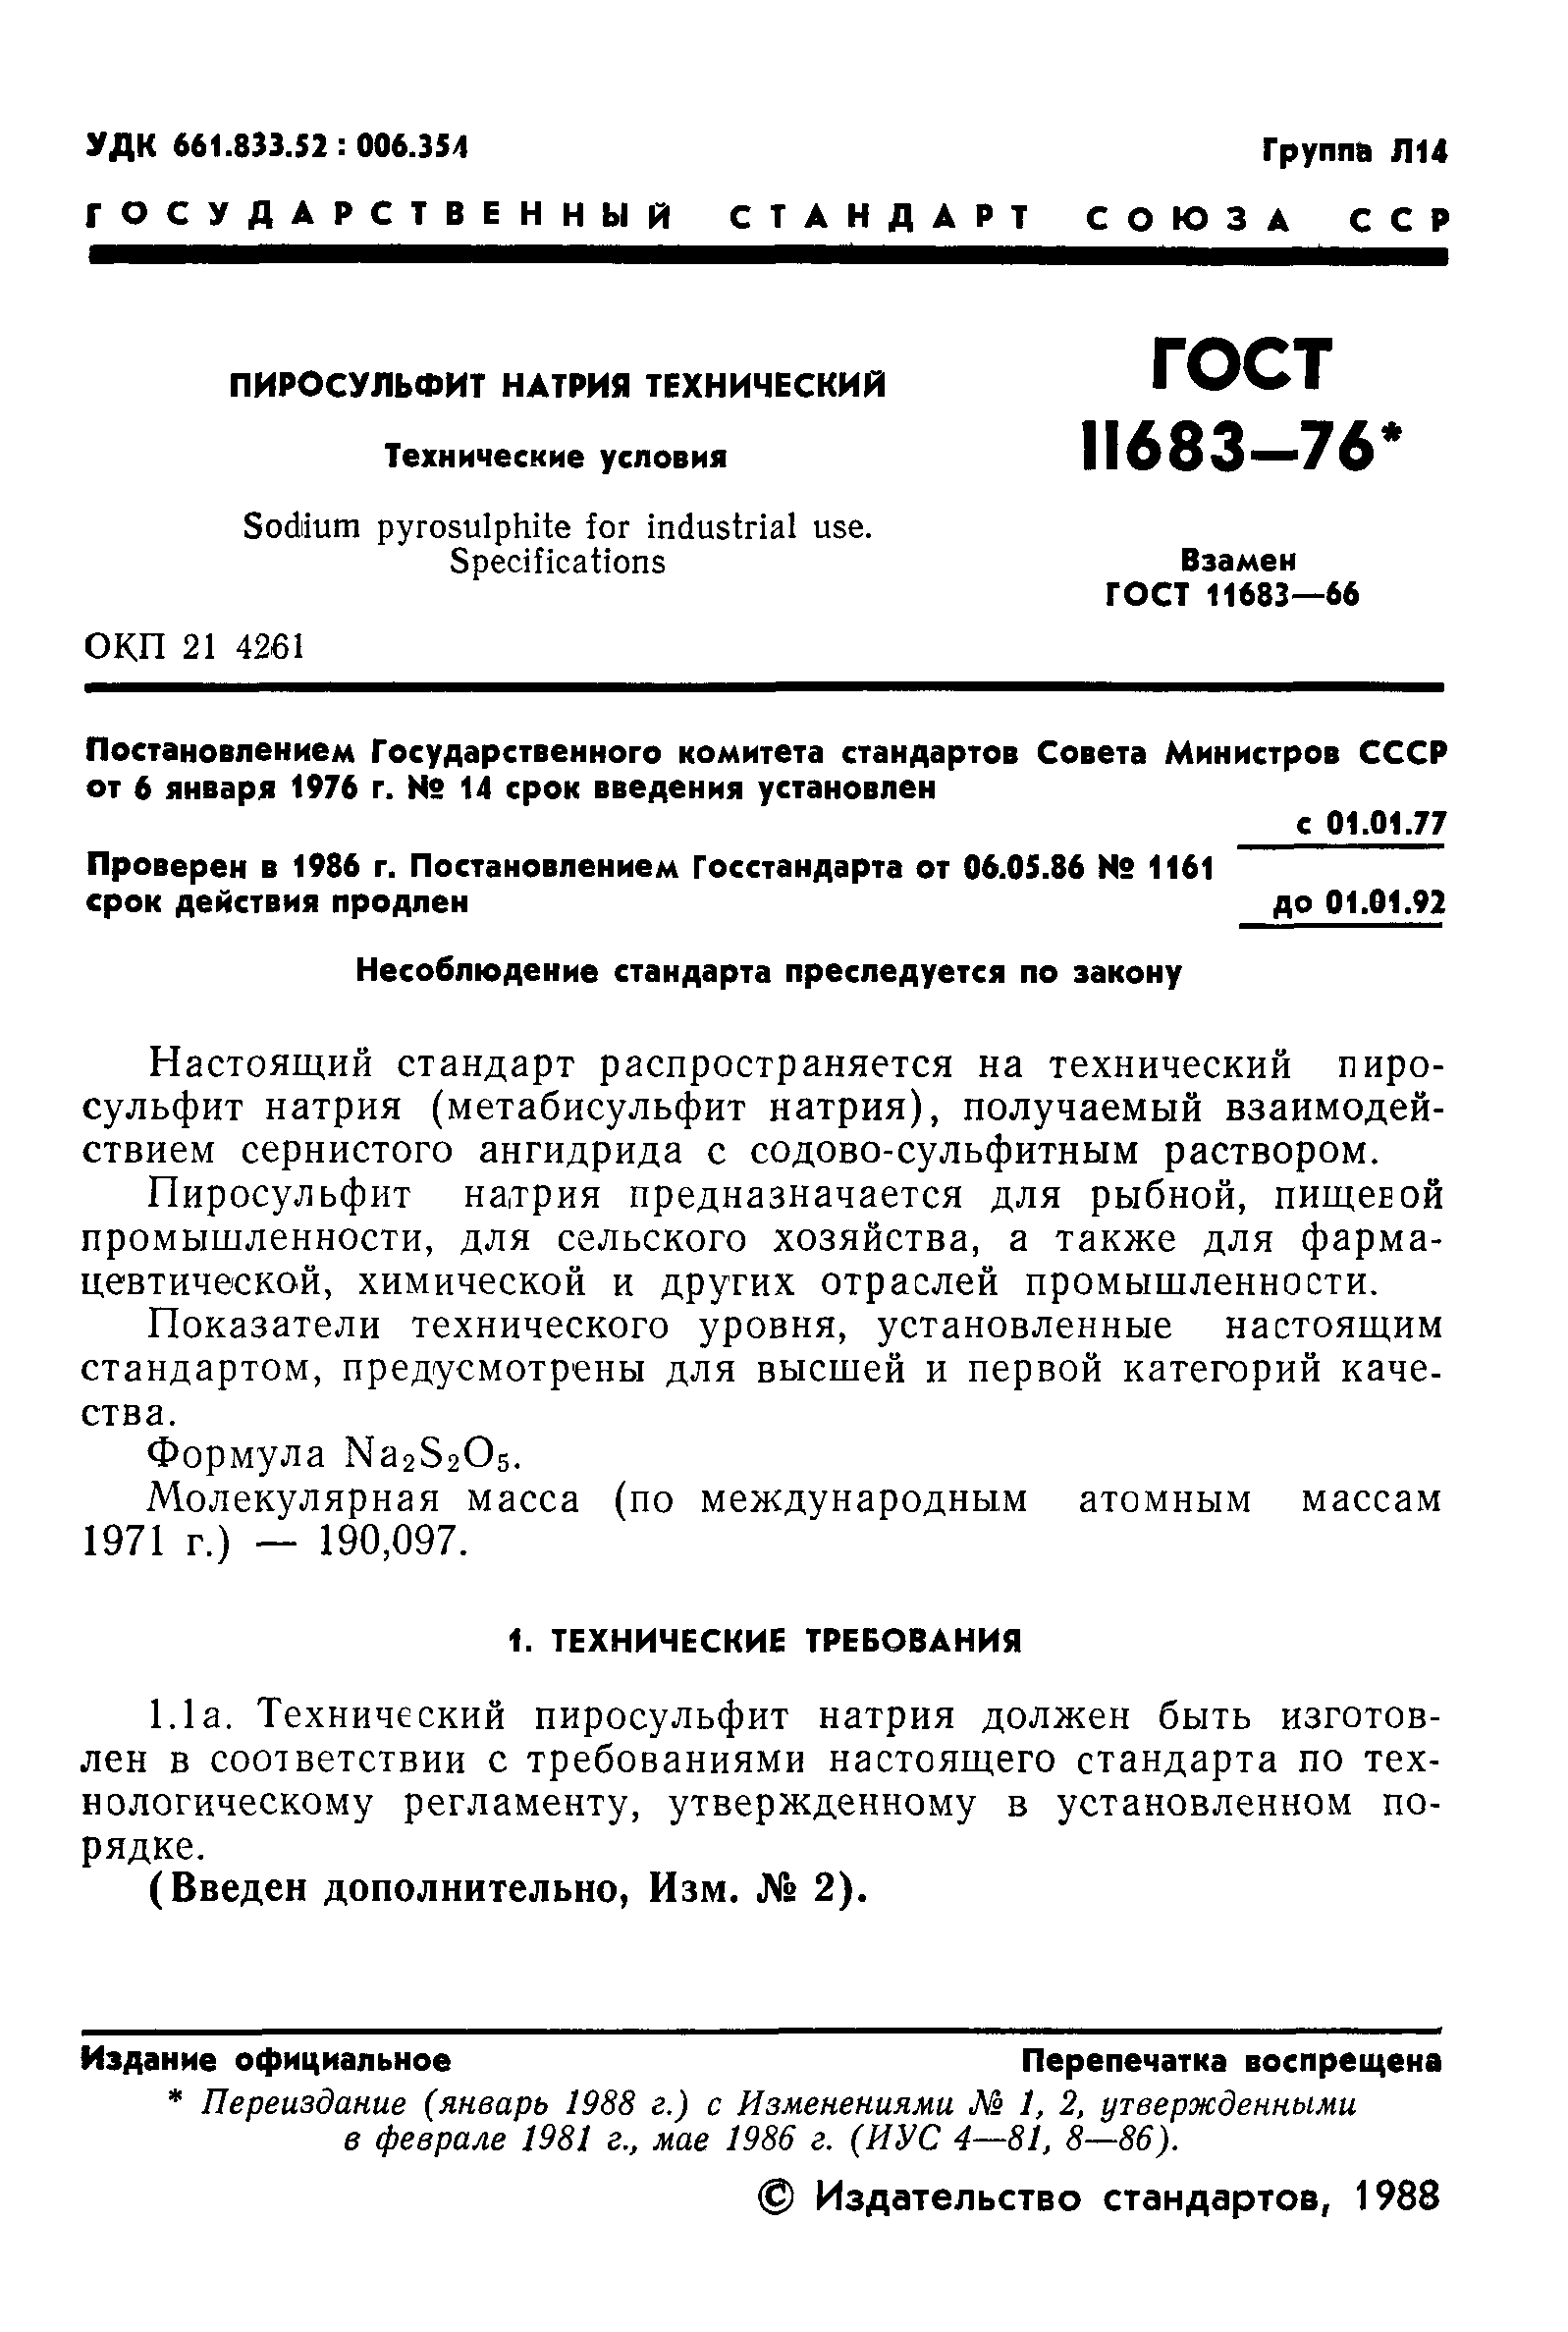 ГОСТ 11683-76